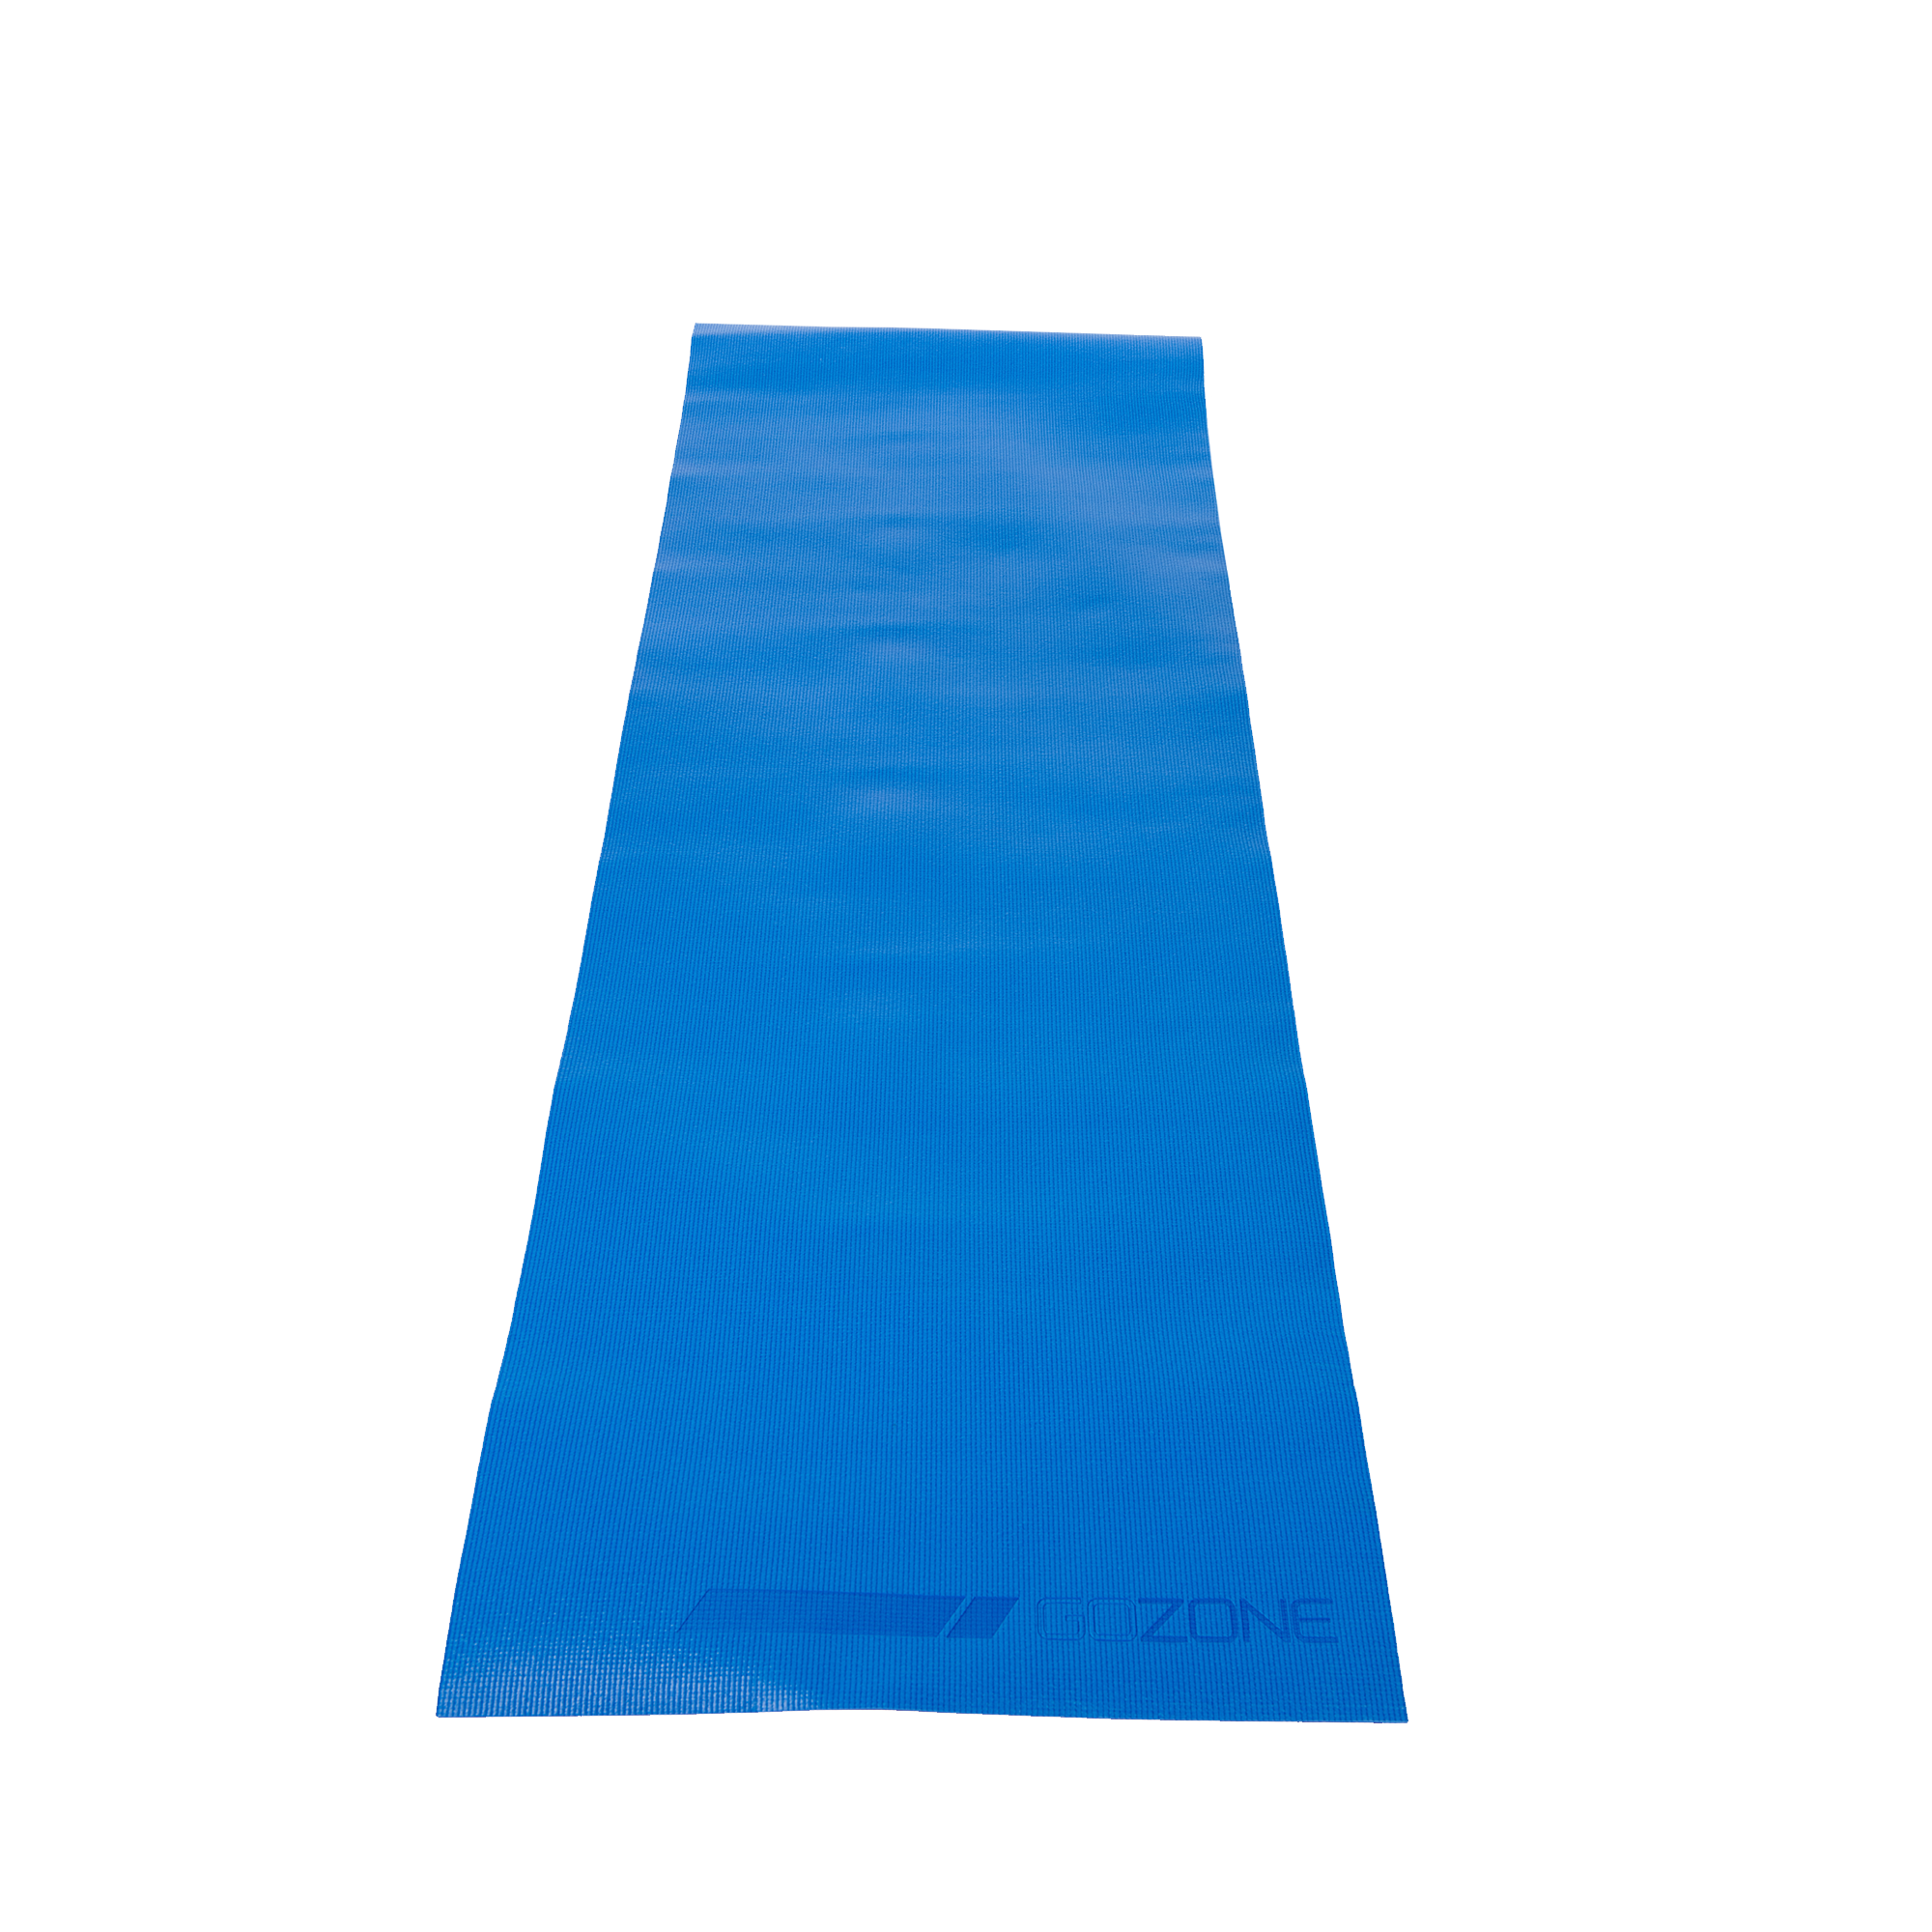 Sunny Health and Fitness Yoga Mat (Blue), Model:31, Mats -  Canada